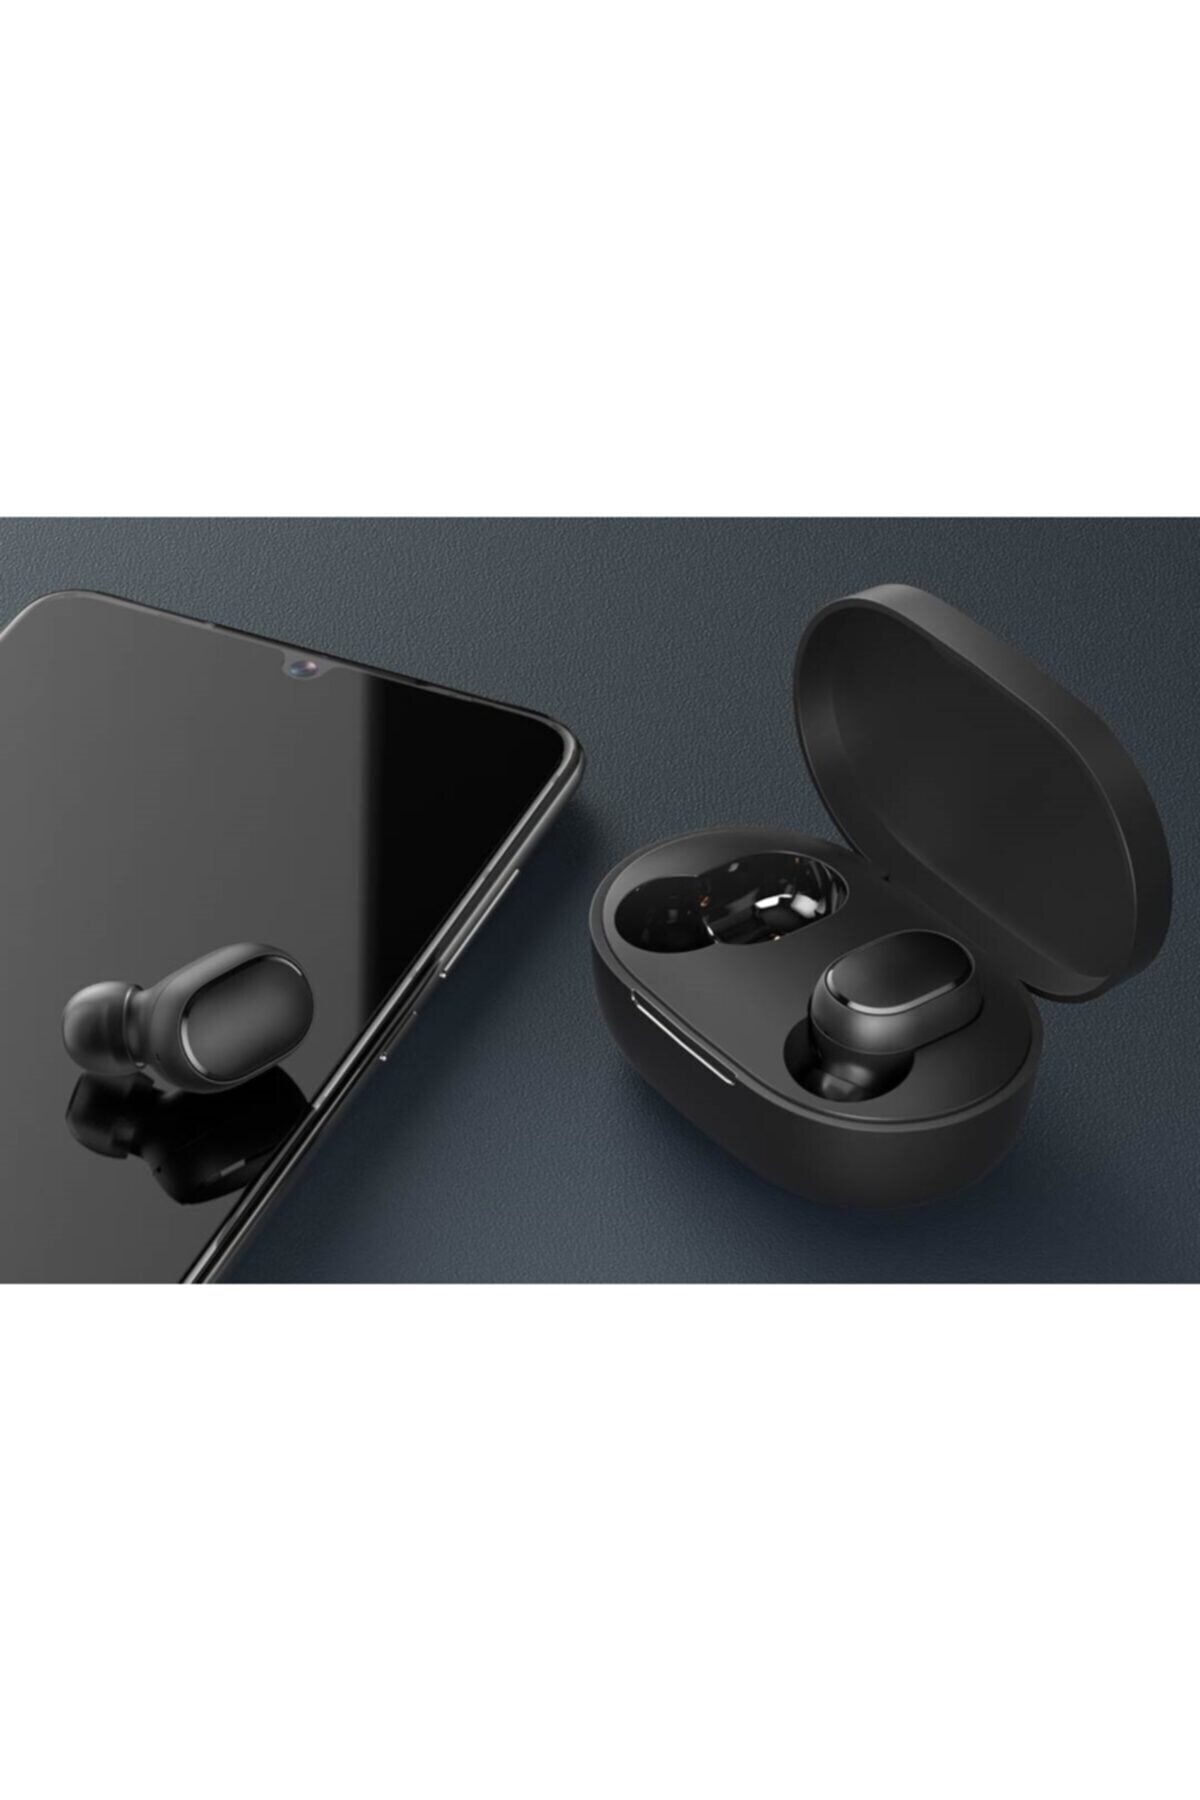 Xiaomi Royteknoloji Redmi Earbuds Basic 2 Tws Bluetooth 5.0 Kulaklık